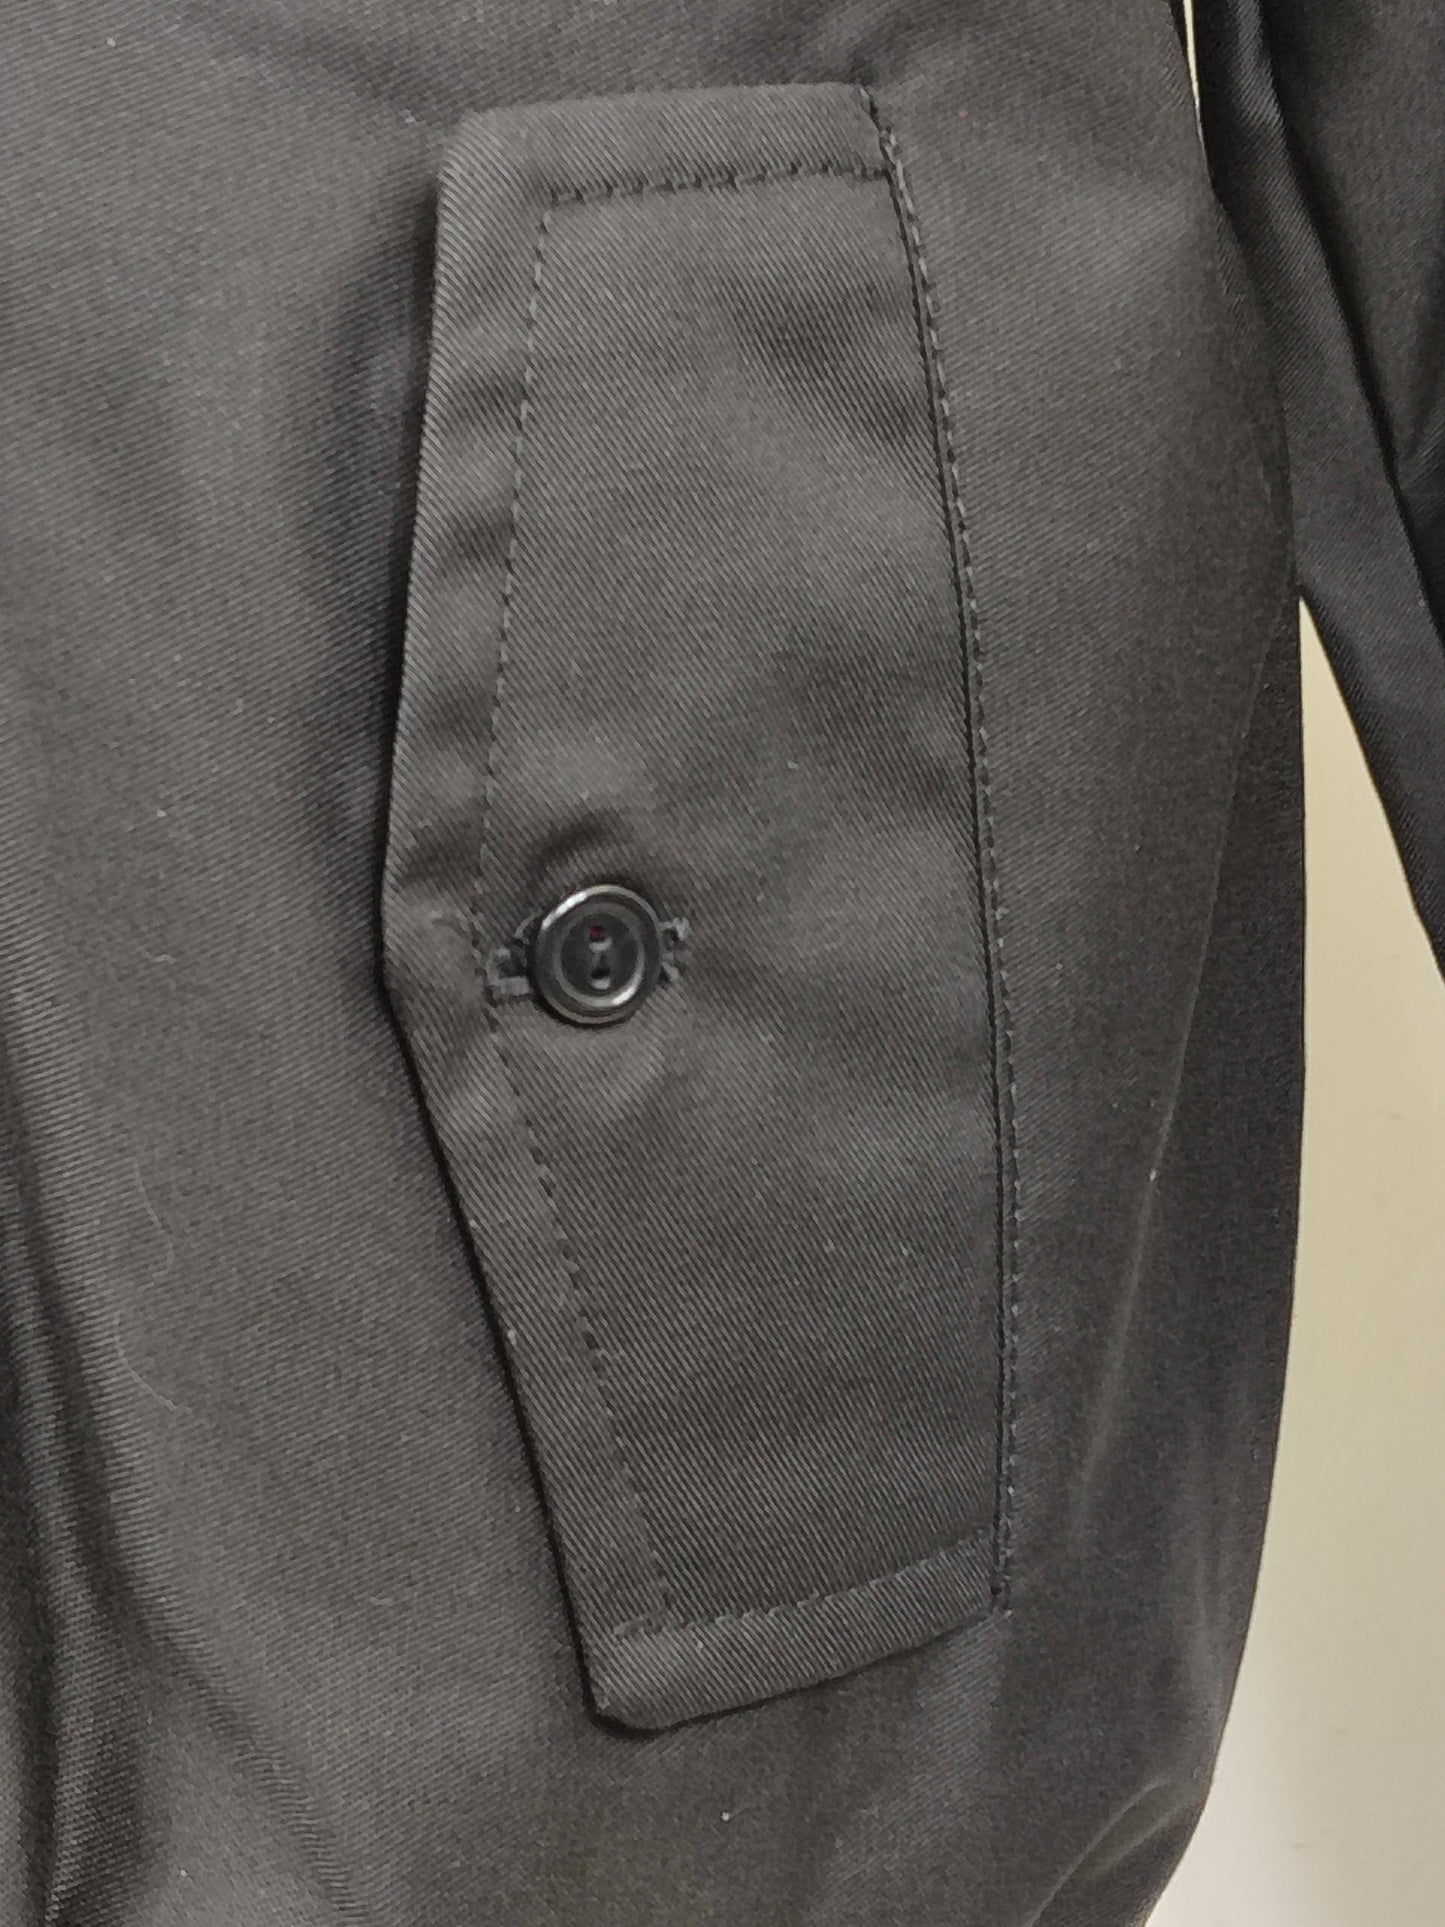 Giacca Harrington nera da uomo in cotone Made in England - Man Black Harrington Jacket